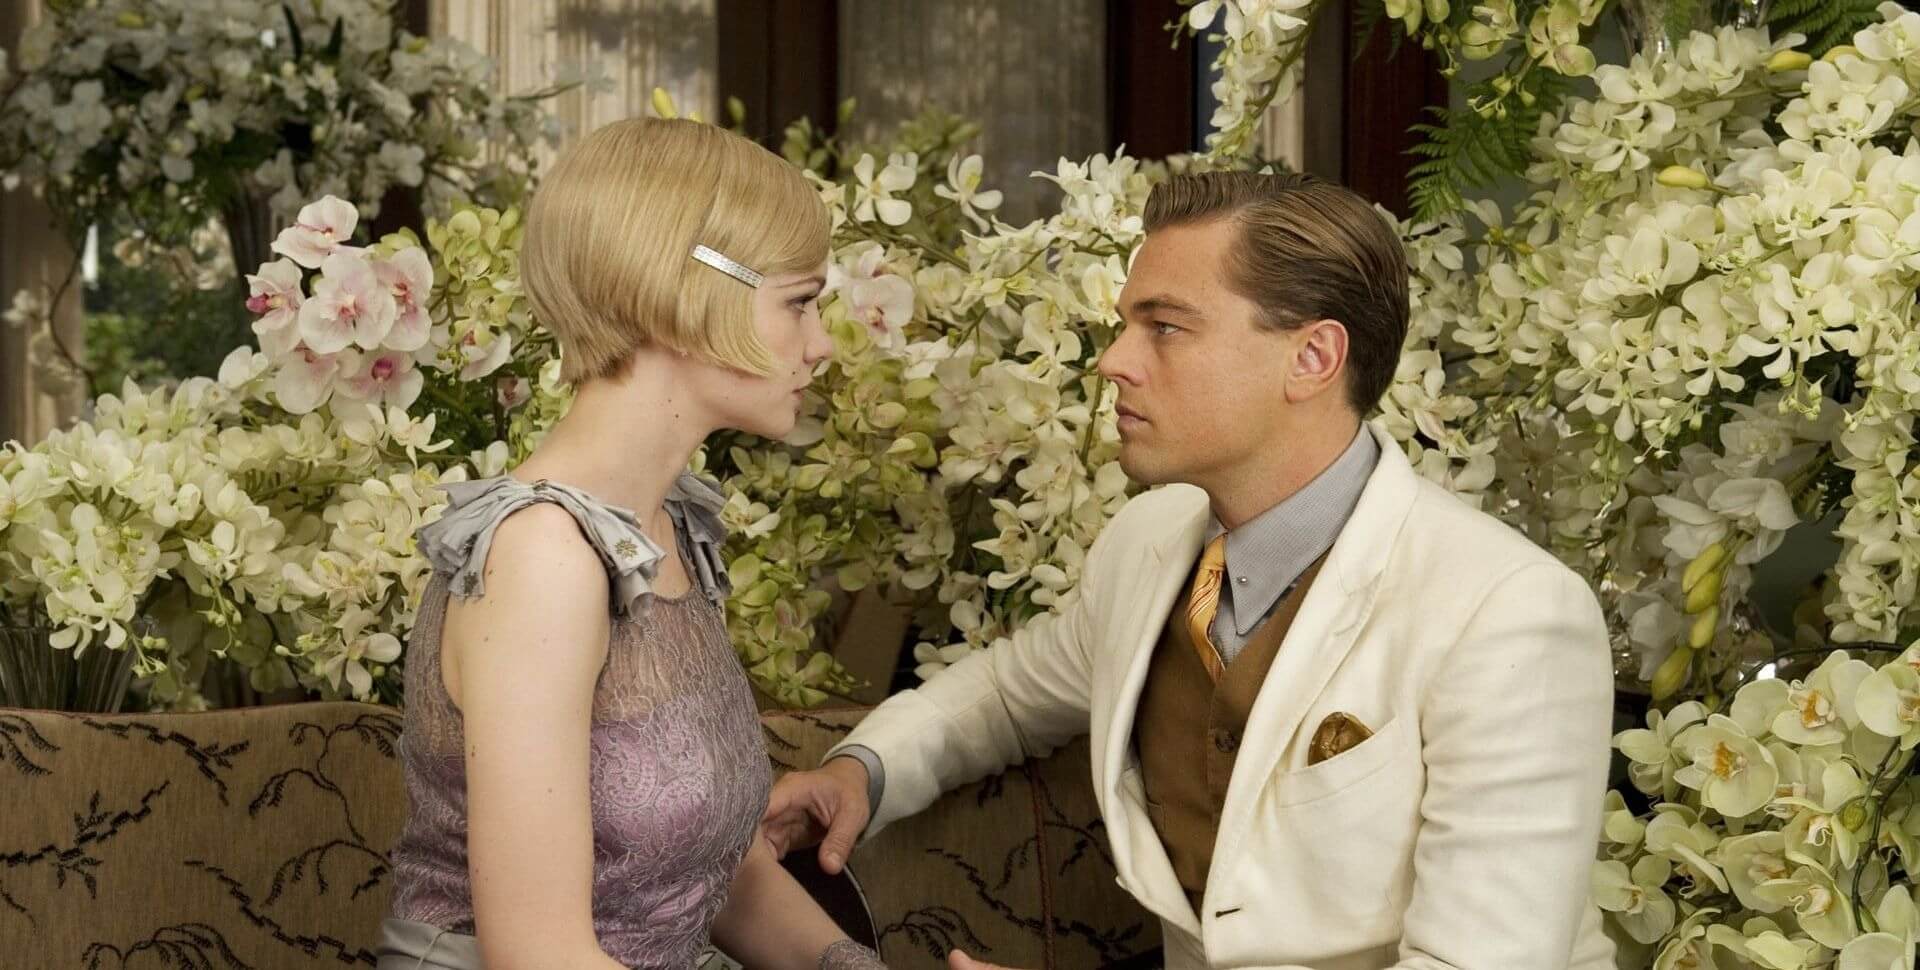 The Great Gatsby 2013 Image Of Leonardo DiCaprio And Carey Mulligan 2 1 